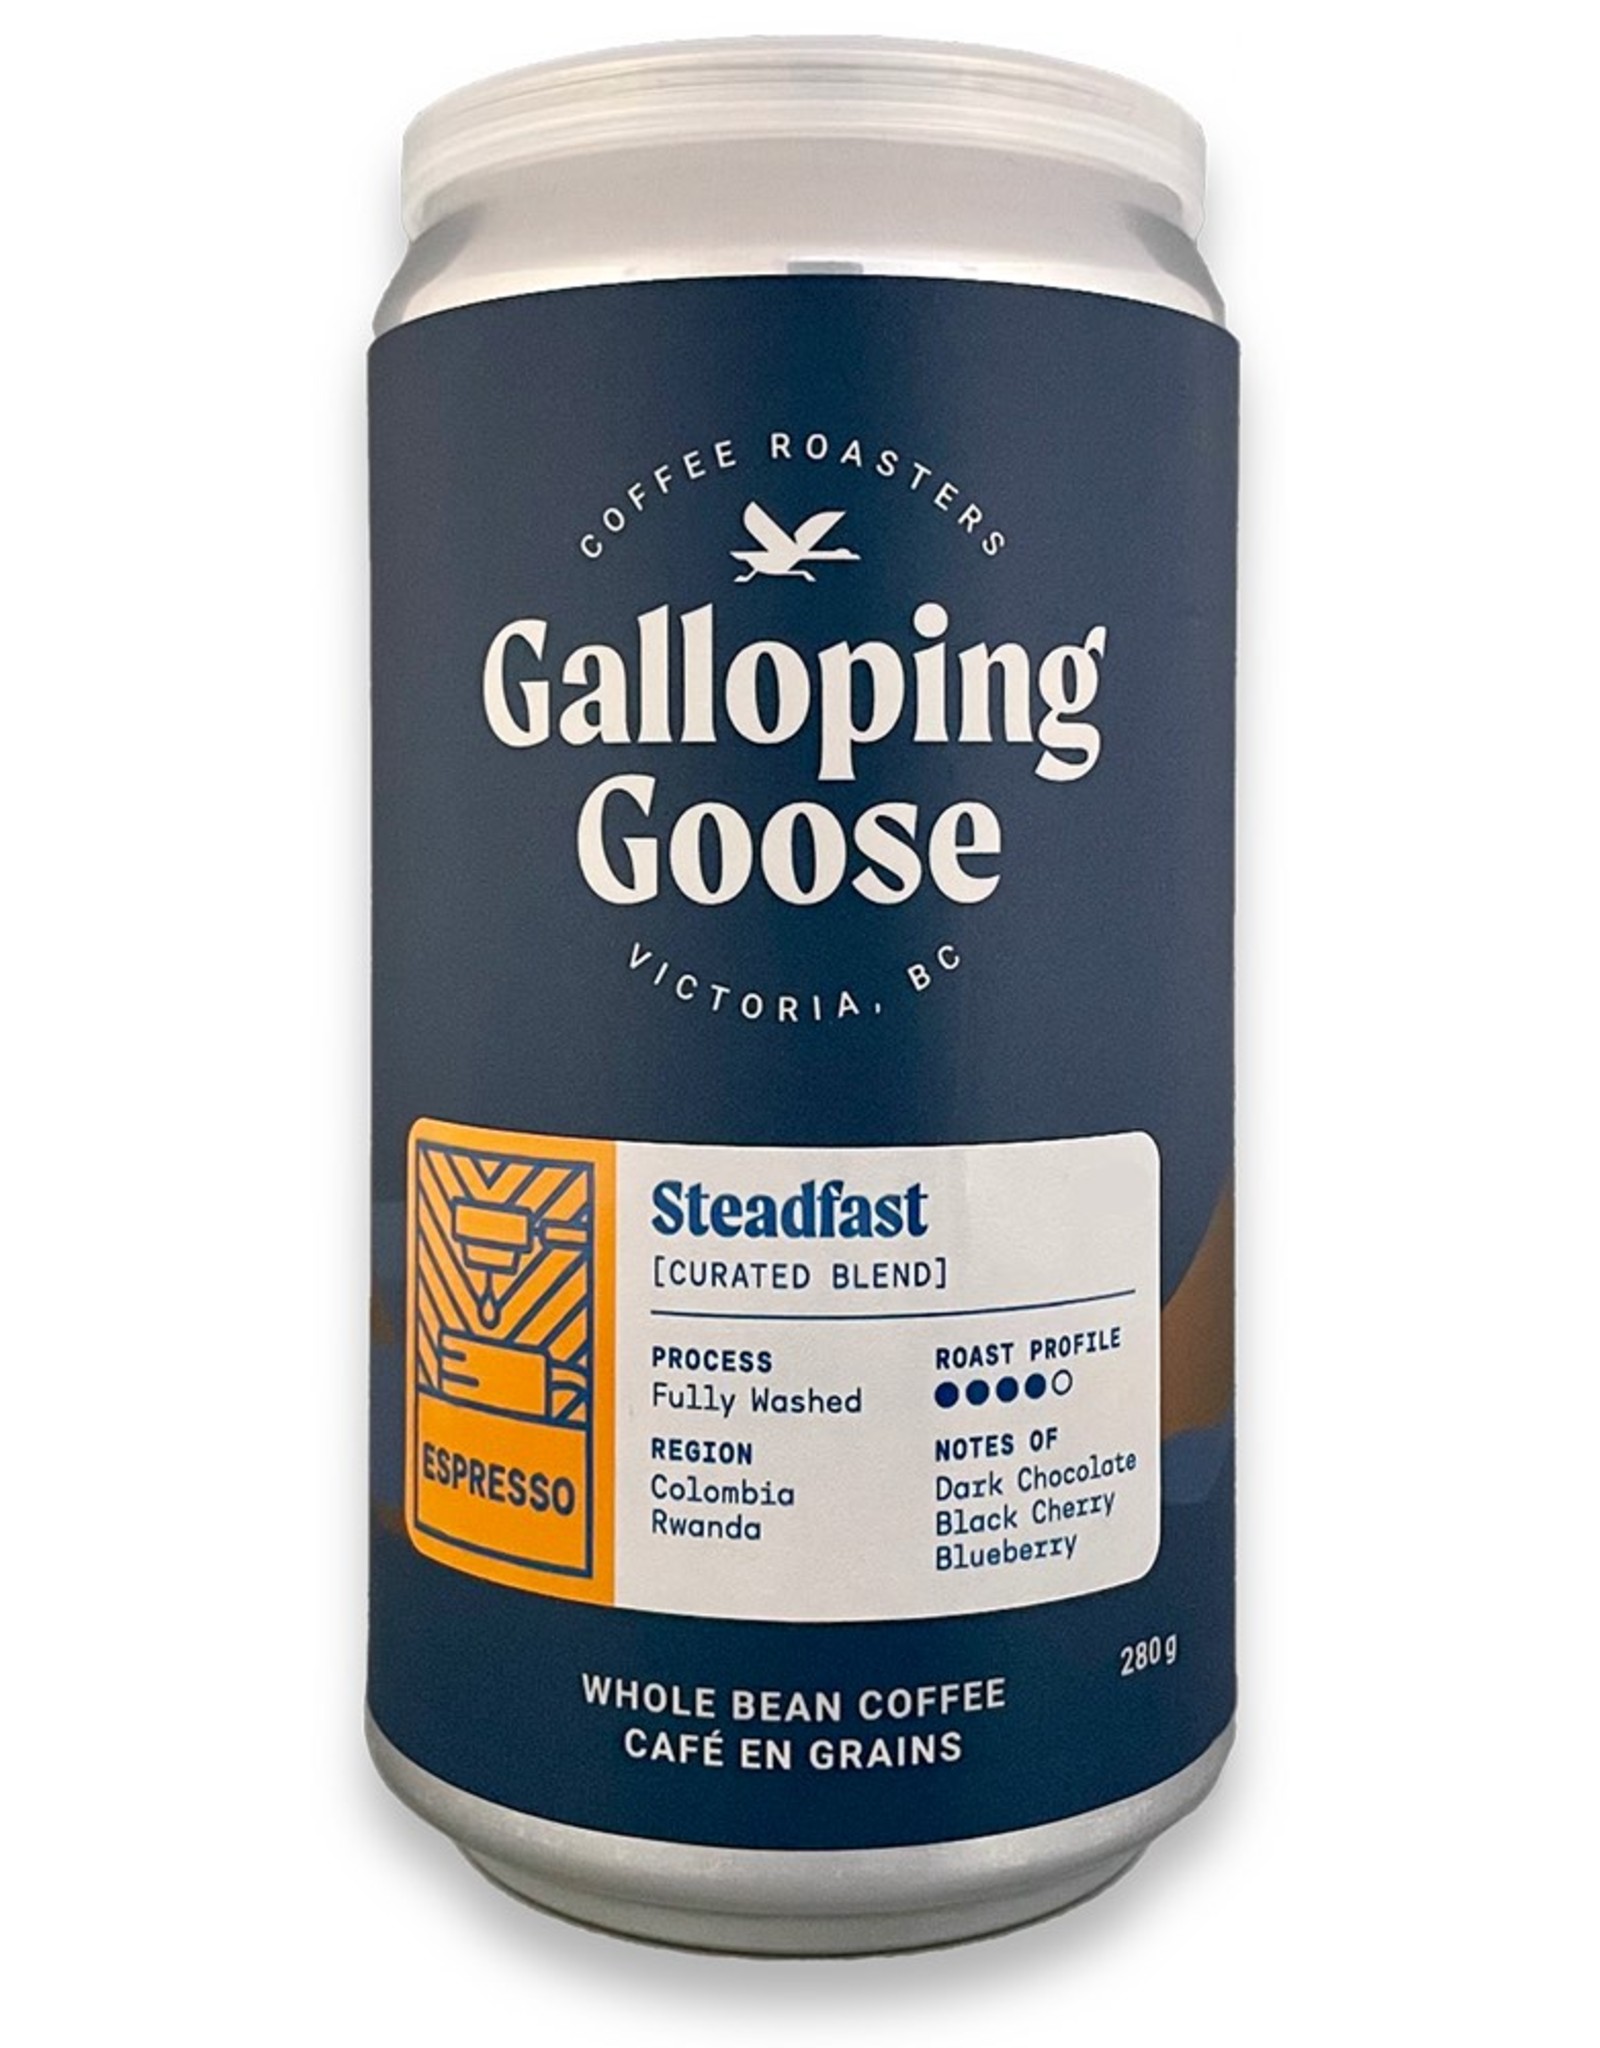 Galloping Goose Steadfast Espresso Coffee